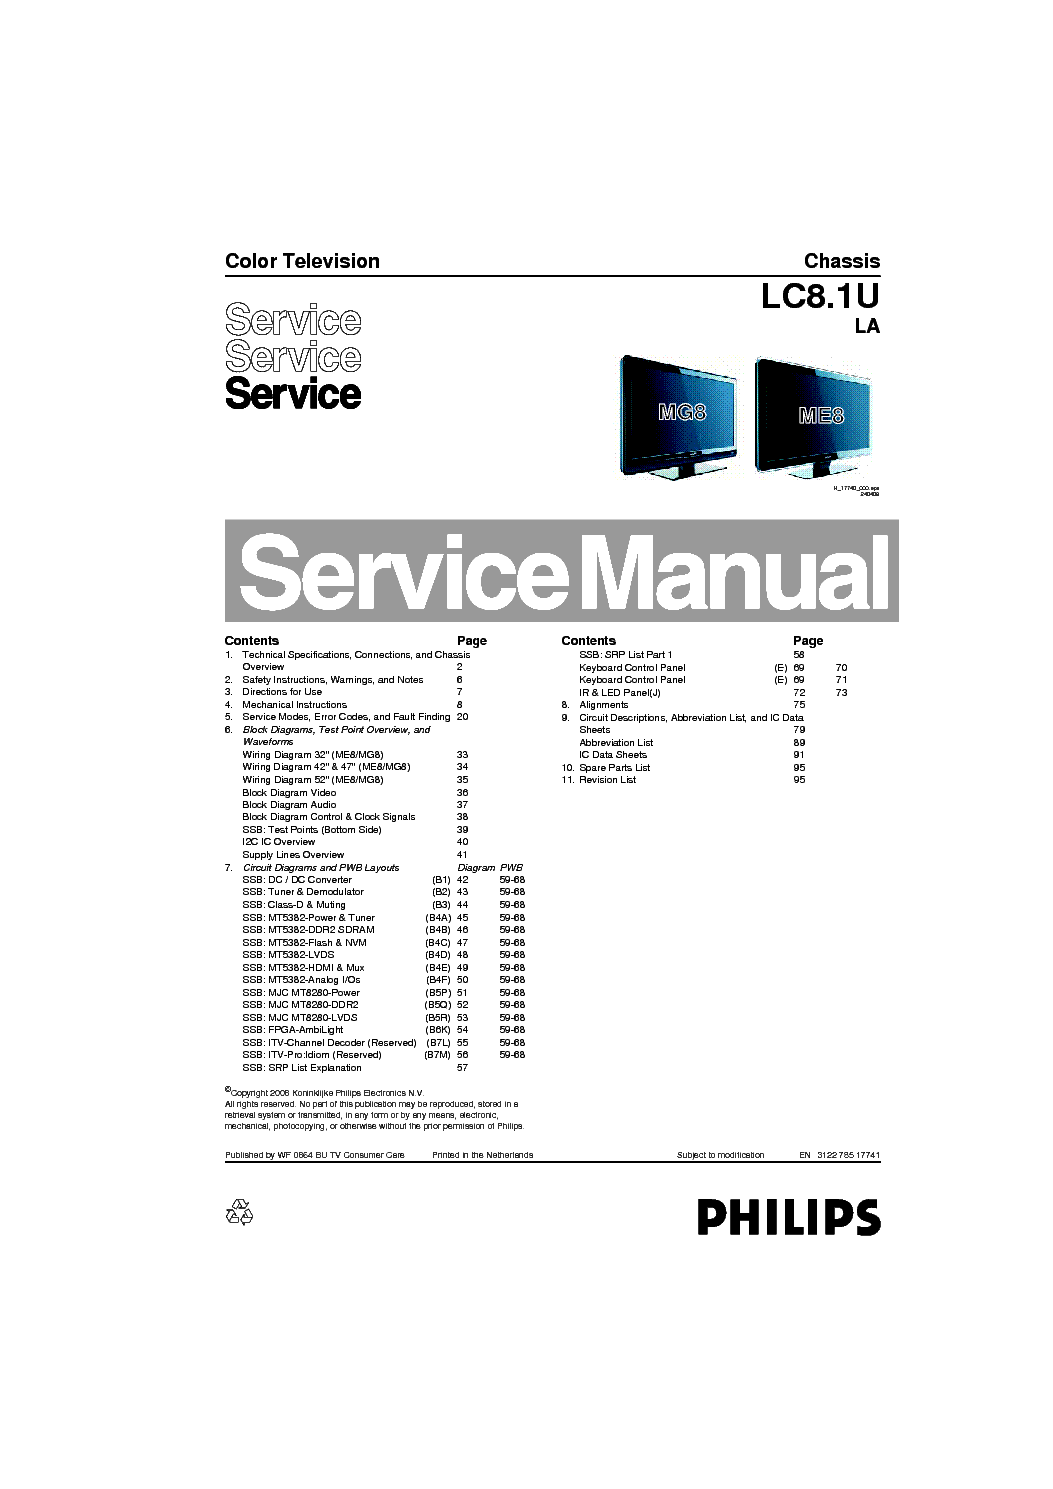 PHILIPS CHASSIS LC8.1U-LA SM service manual (1st page)